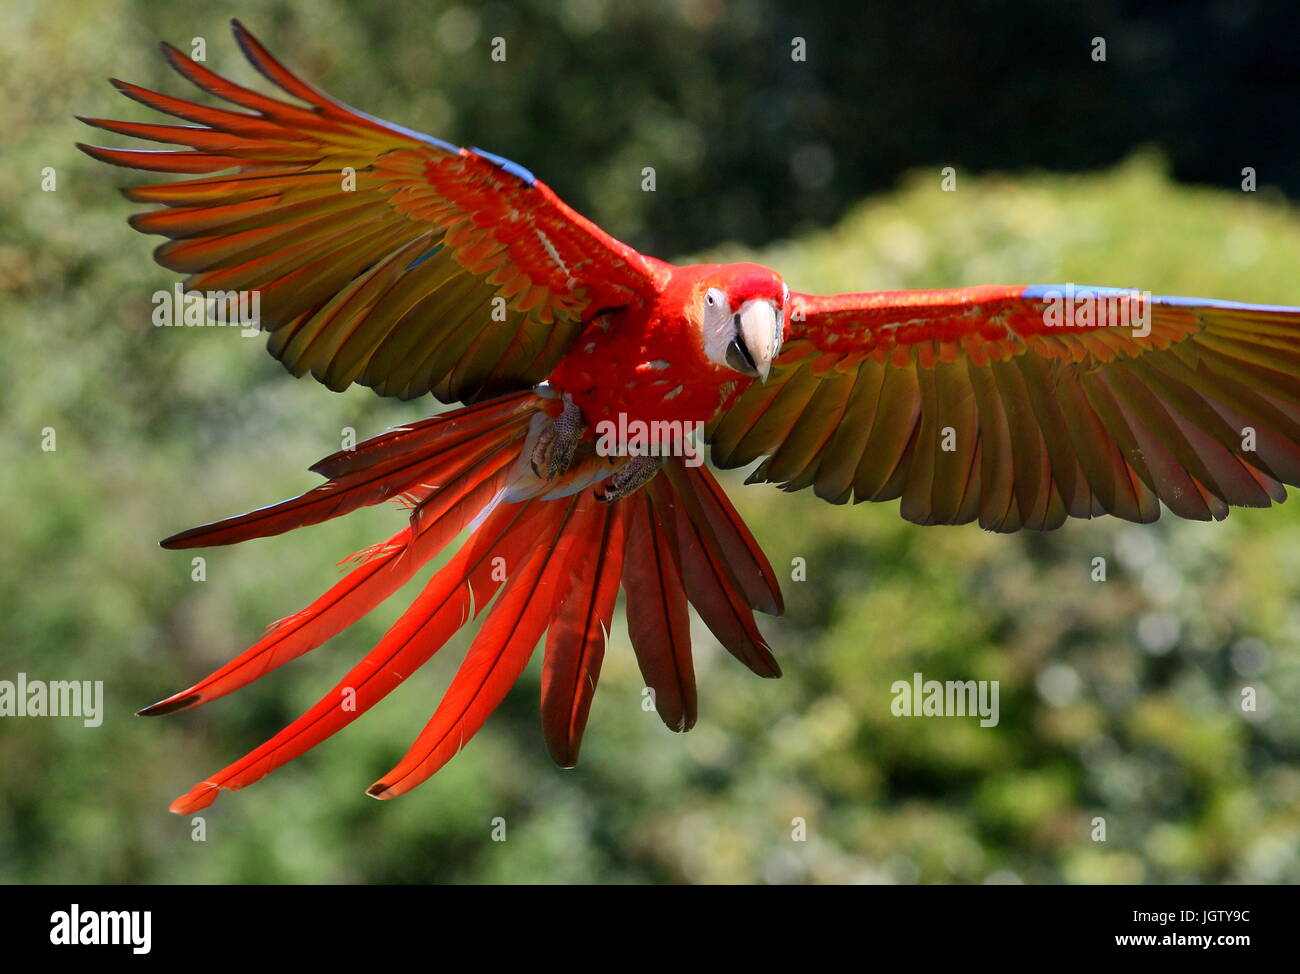 South American hellroten Aras (Ara Macao) im Flug, kommend in Richtung der Kamera Flügel ausgestreckt. Stockfoto